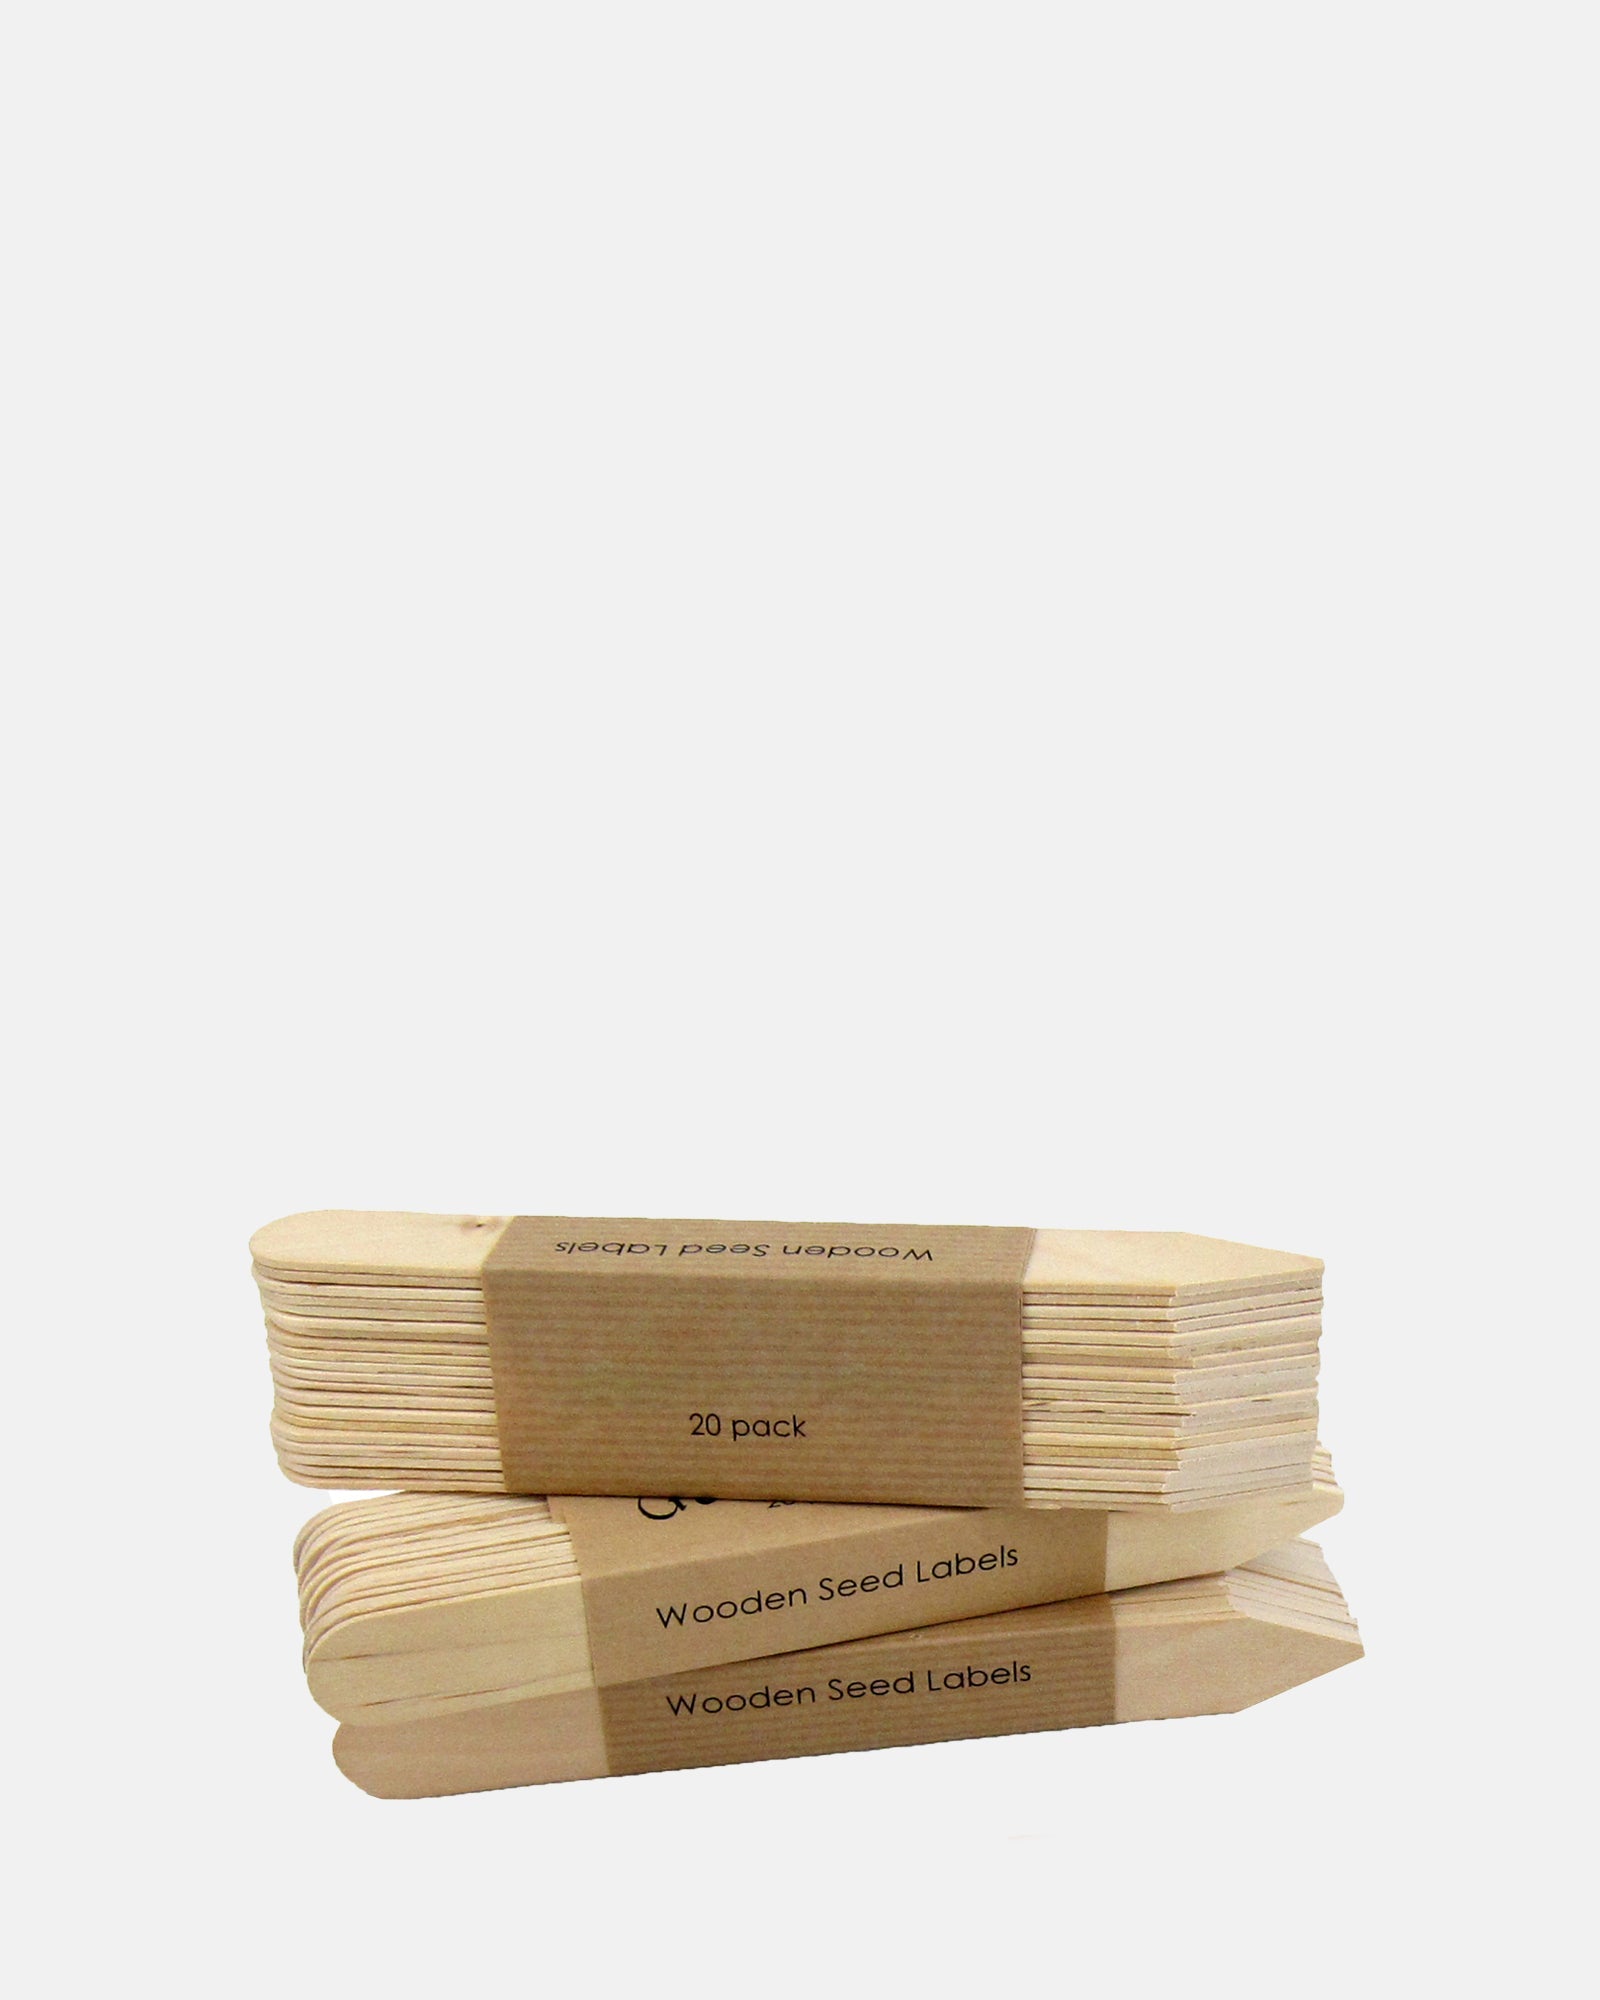 Wooden Seed Labels - BRIT LOCKER